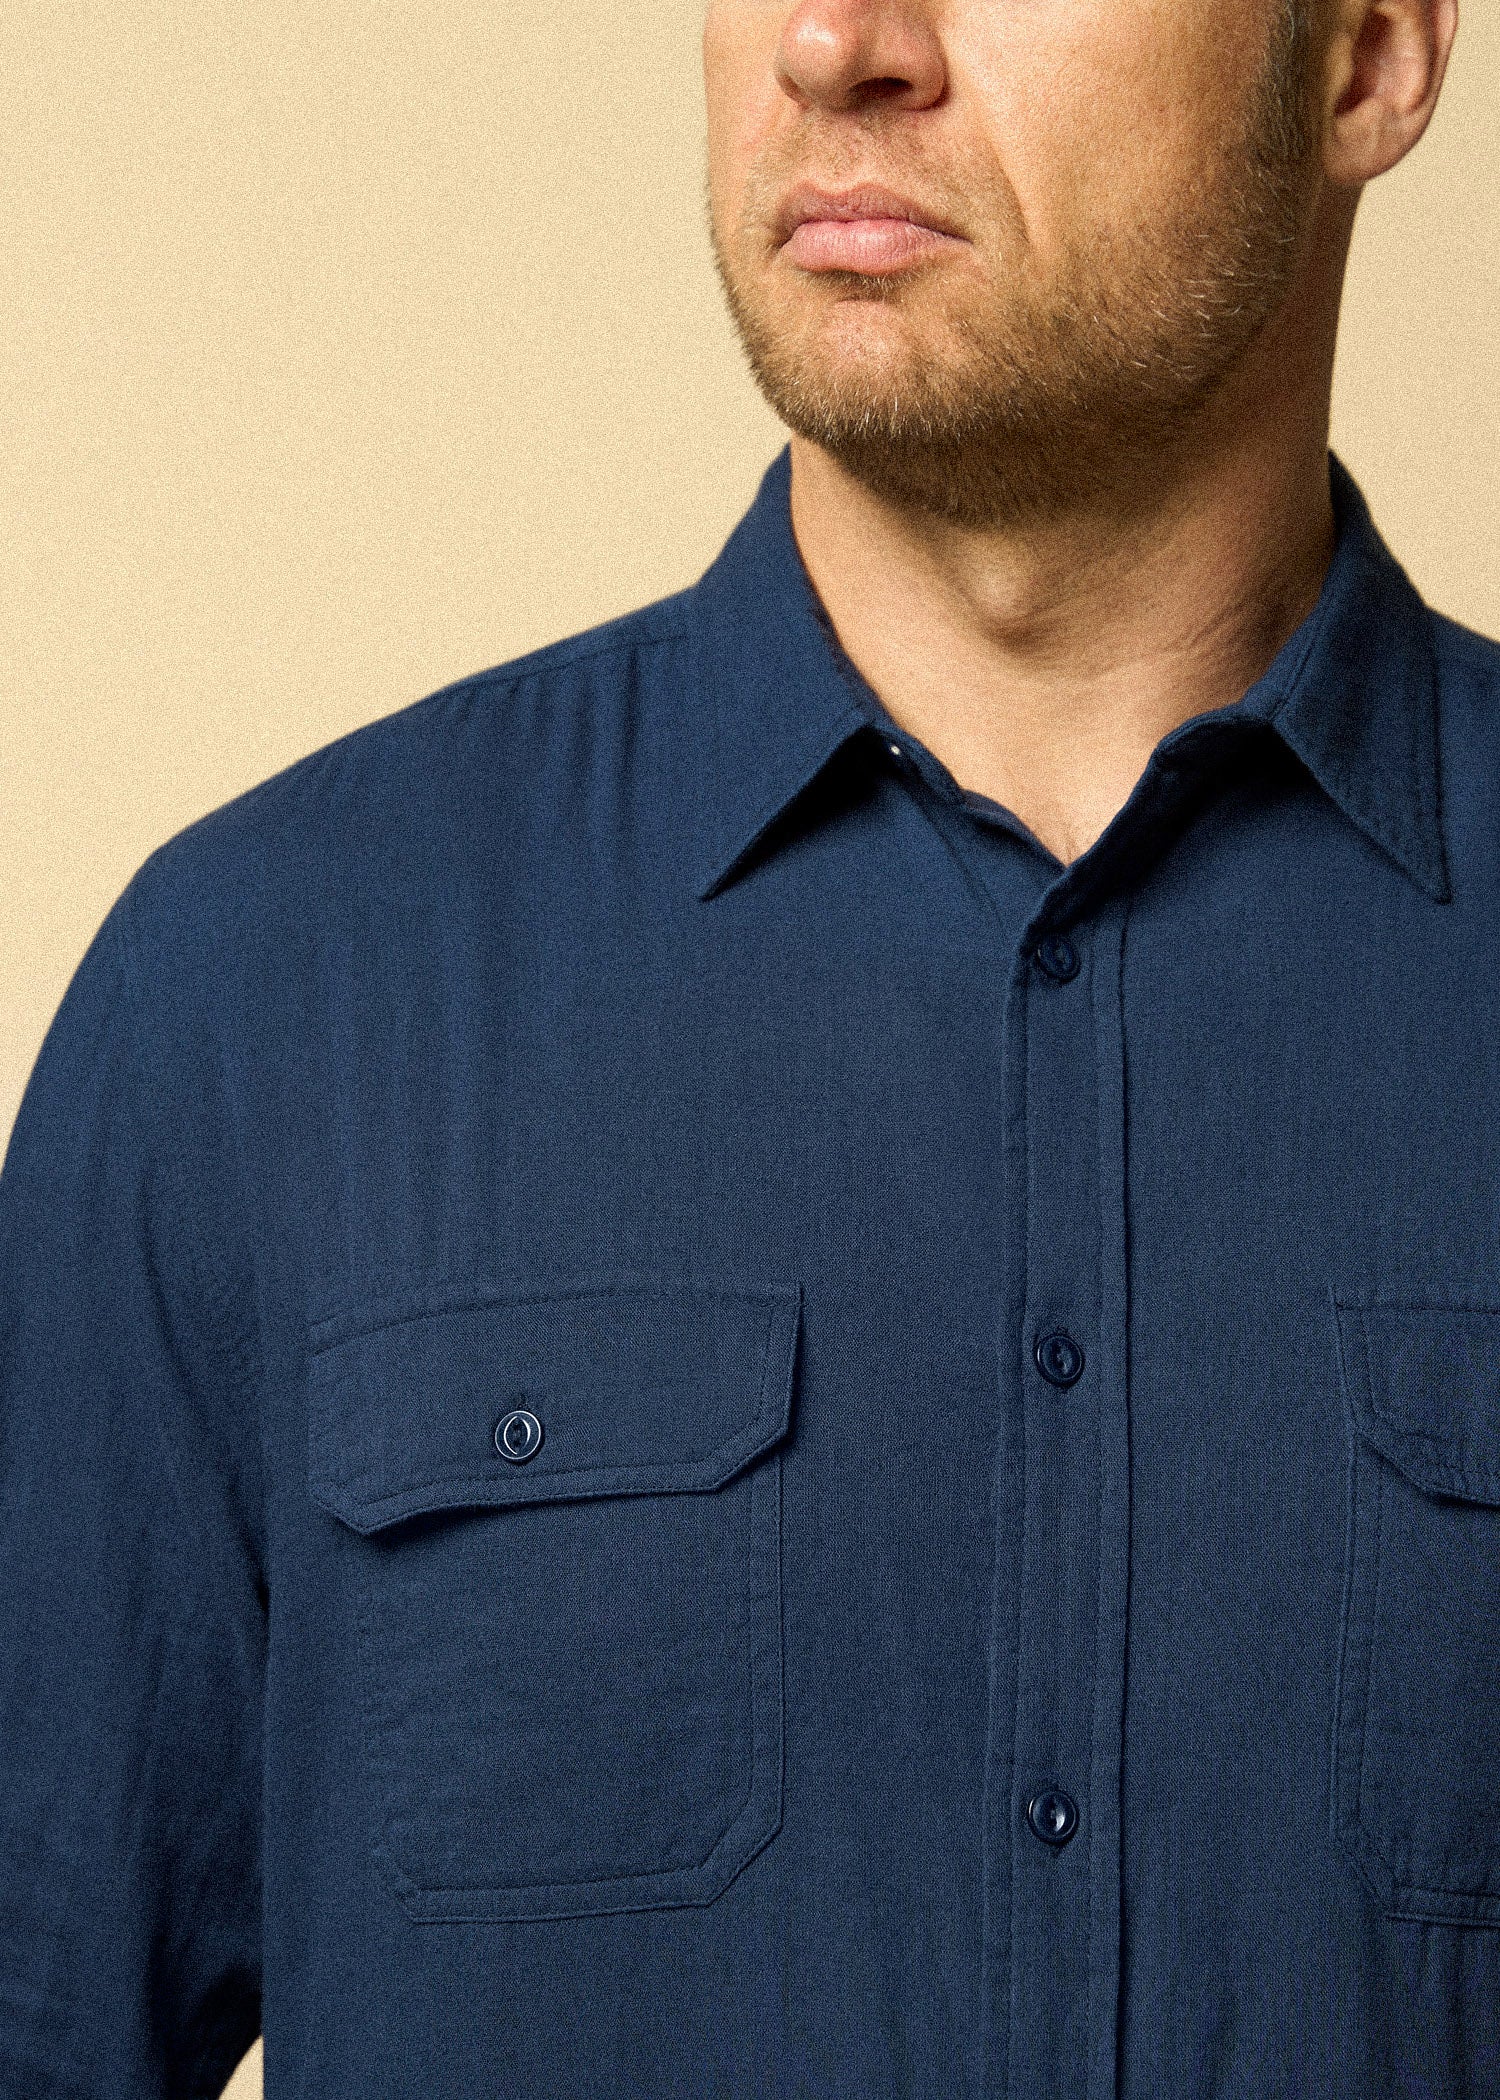      LJ-Men-Double-Weave-Shirt-Vintage-Midnight-Navy-detail